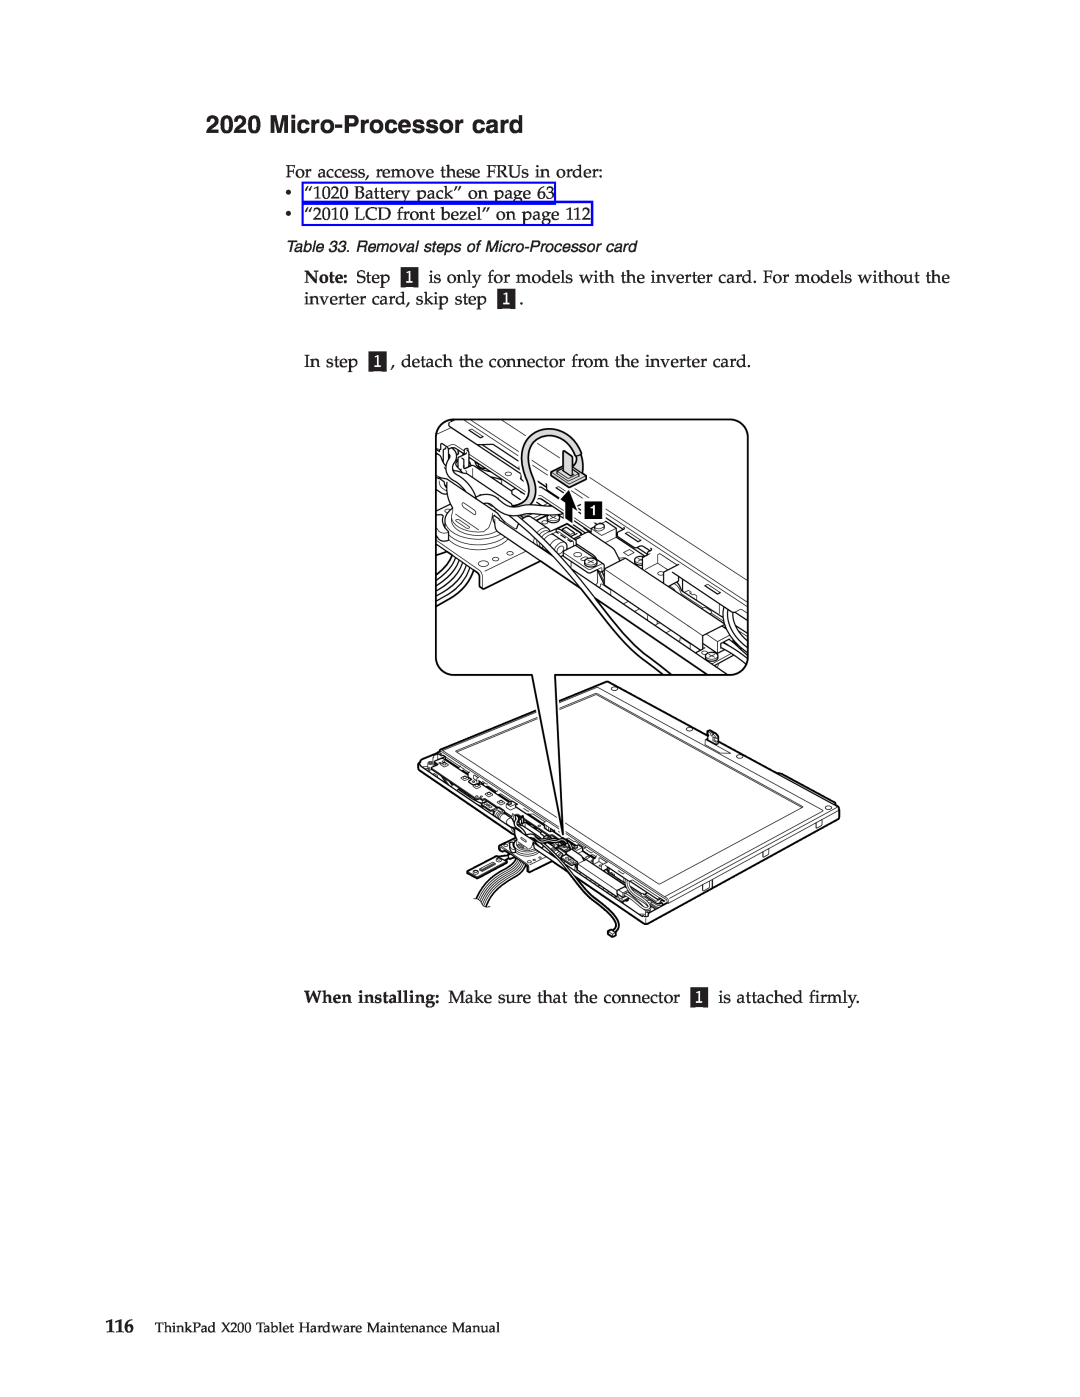 Lenovo X200 manual Micro-Processorcard, Note: Step 